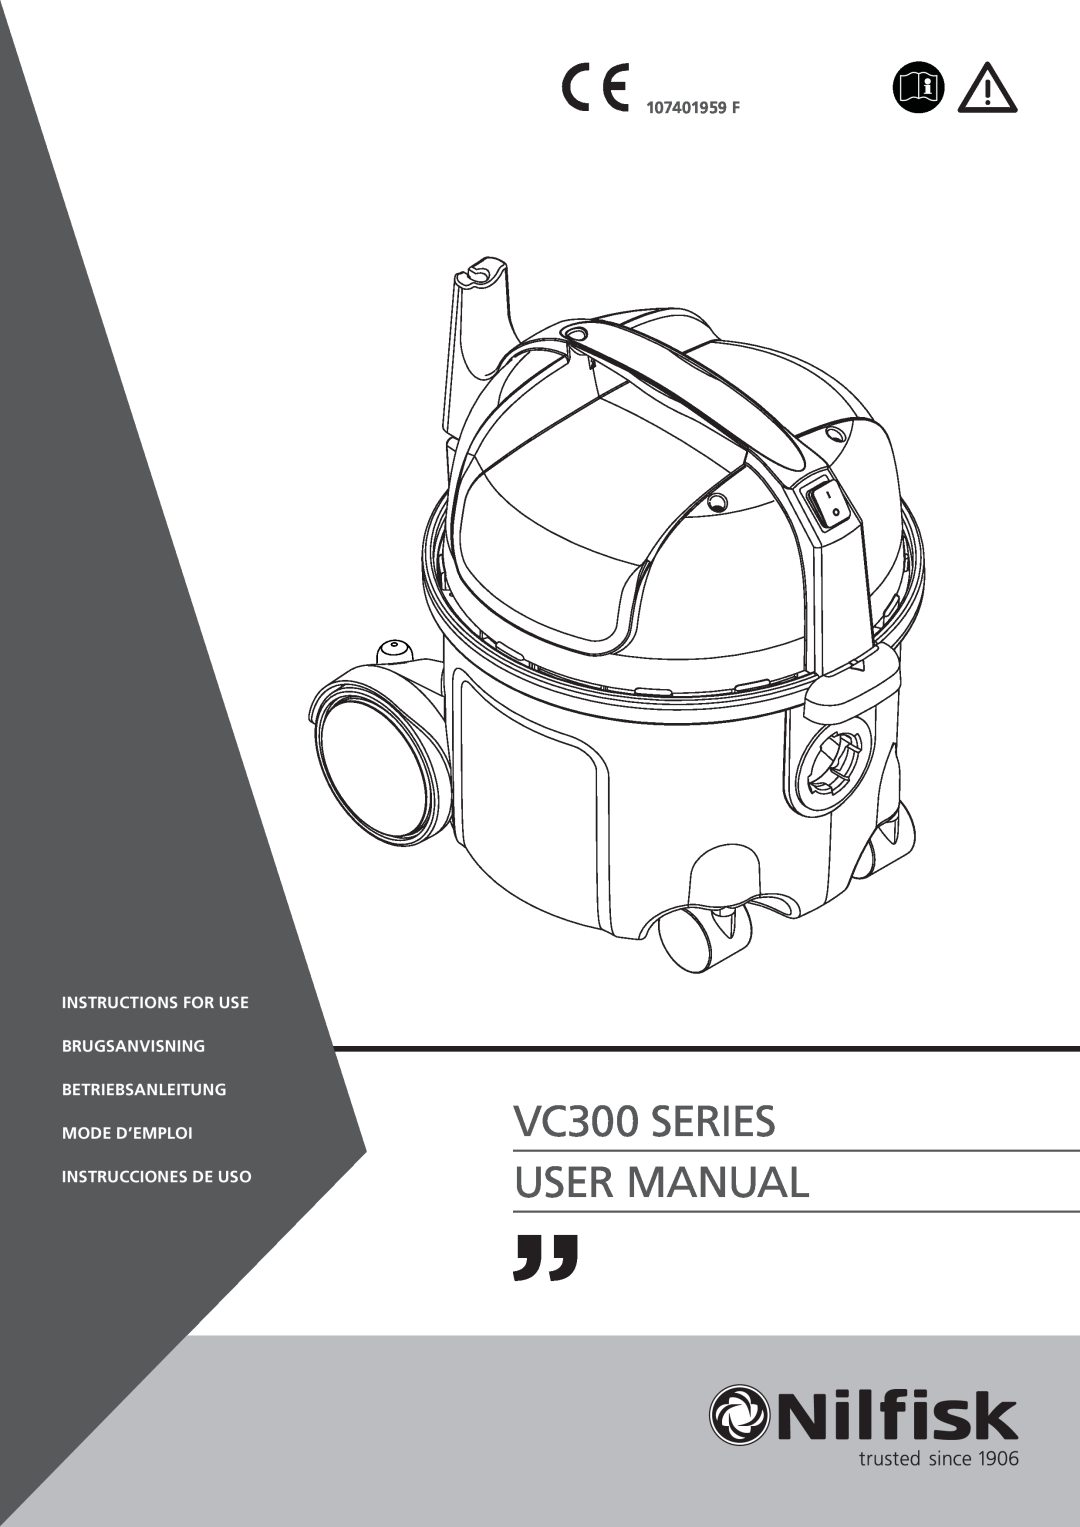 Nilfisk-ALTO VC300 user manual 107401959 F, Instructions For Use Brugsanvisning, Betriebsanleitung Mode D’Emploi 